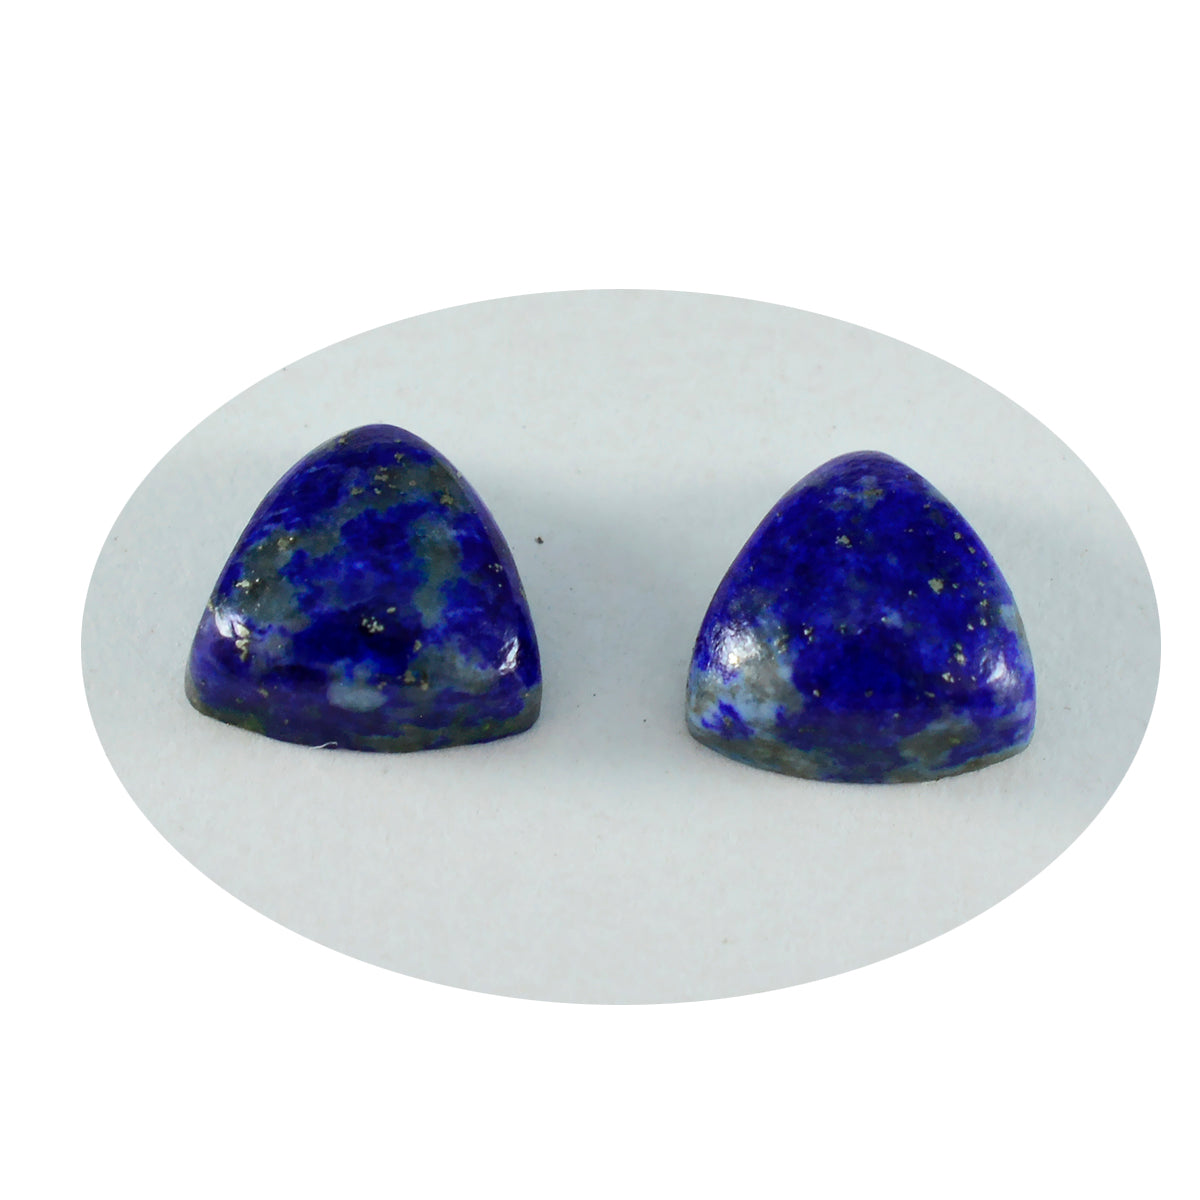 Riyogems 1PC blauwe lapis lazuli cabochon 12x12 mm biljoen vorm uitstekende kwaliteit edelsteen